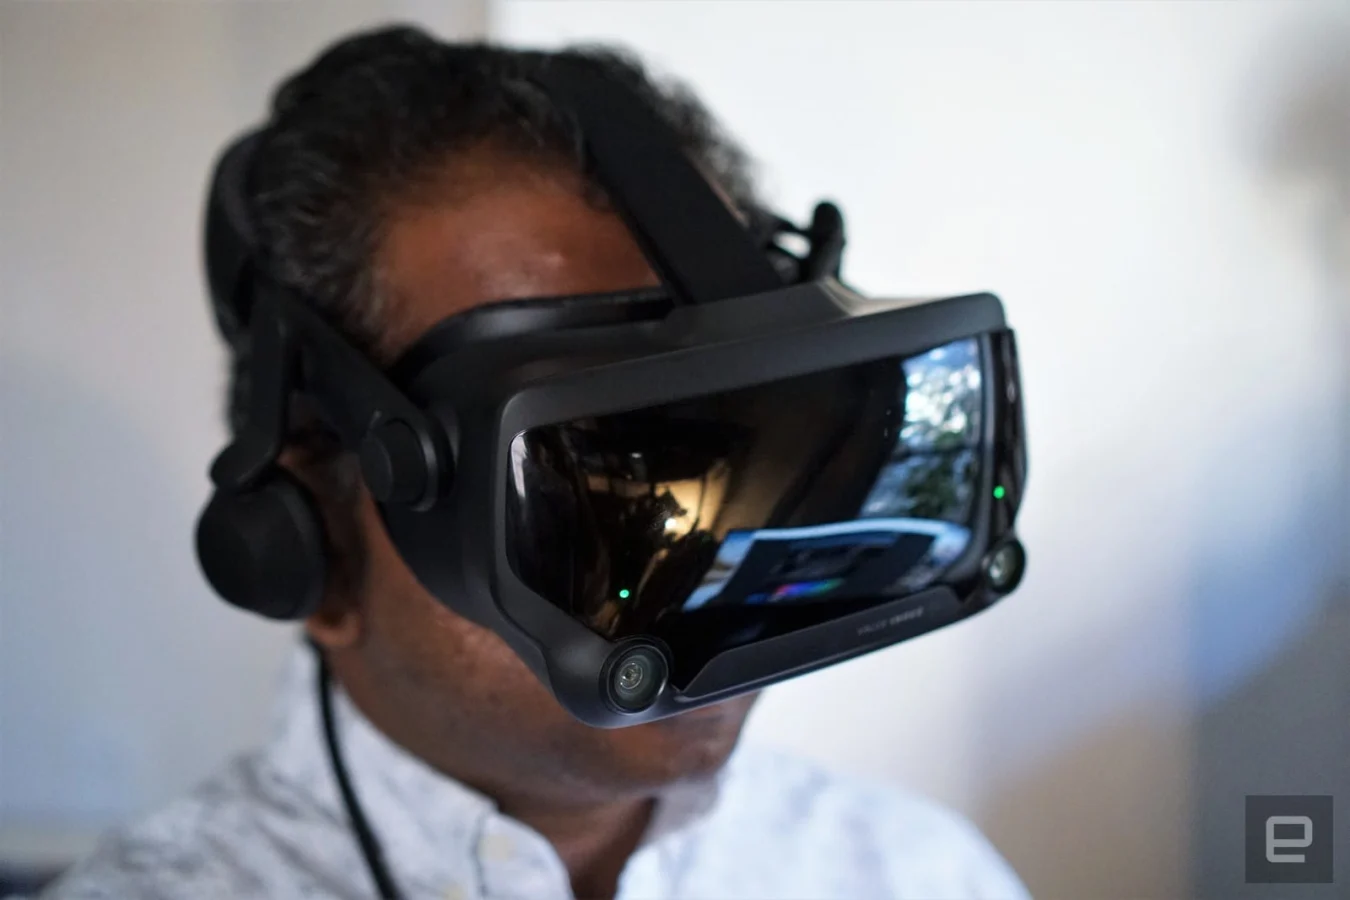 Valve Index VR headset